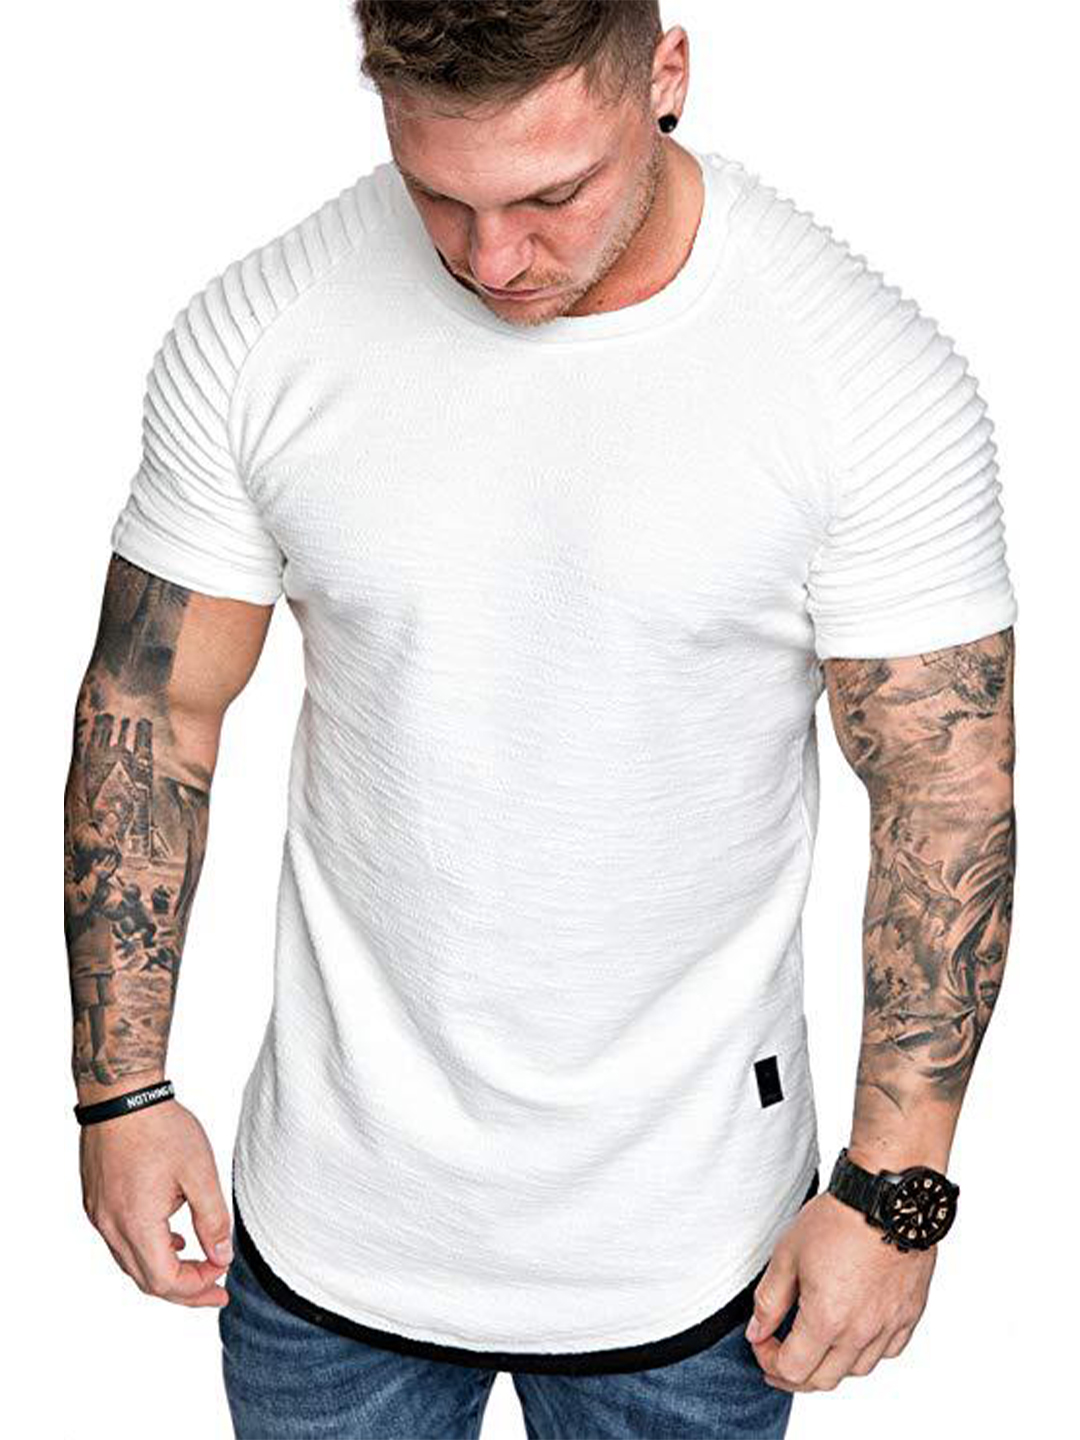 Men's Short Sleeve Contrasting Colors T-shirt